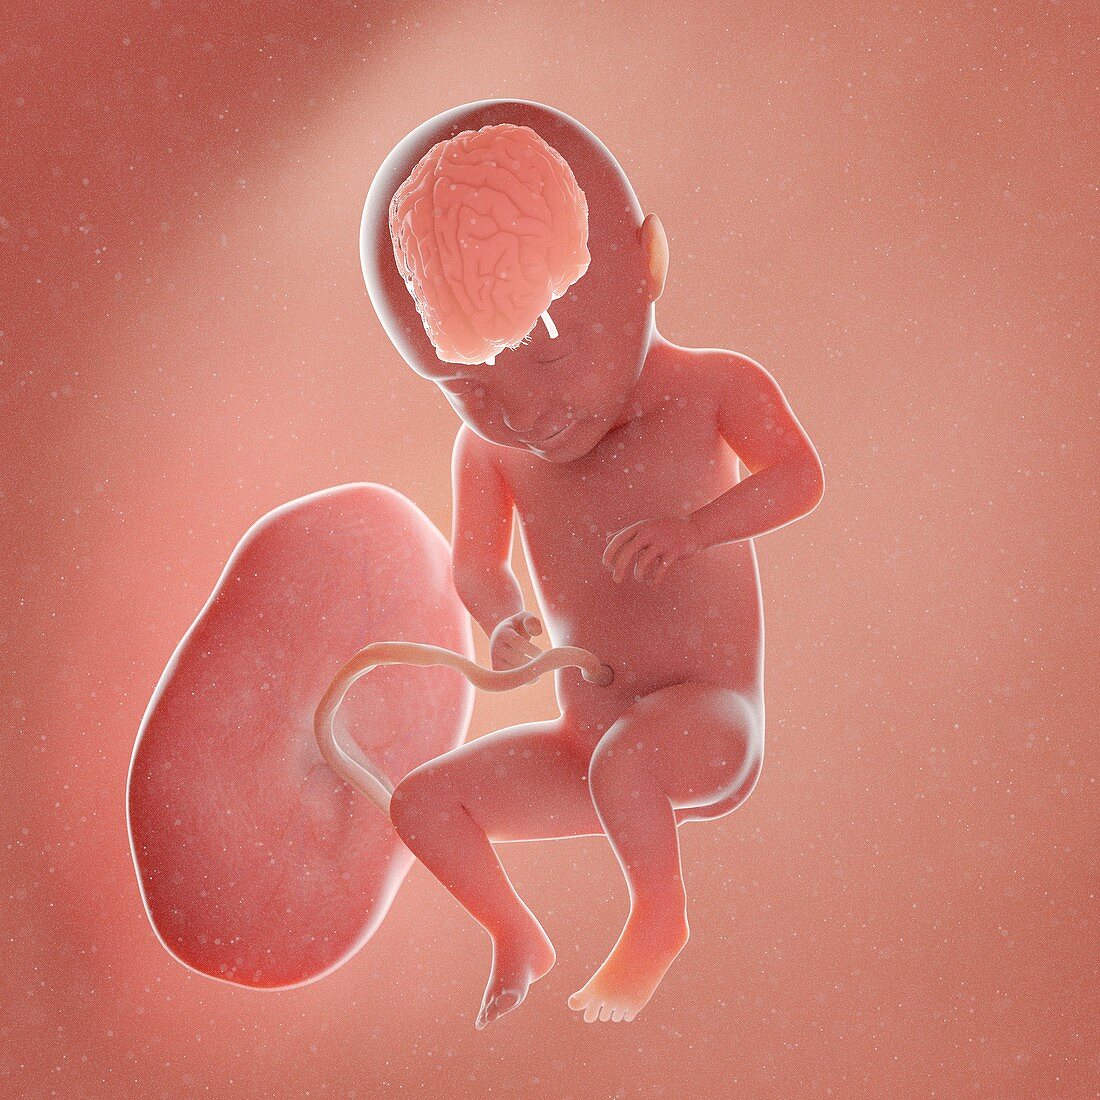 Fetal brain, illustration